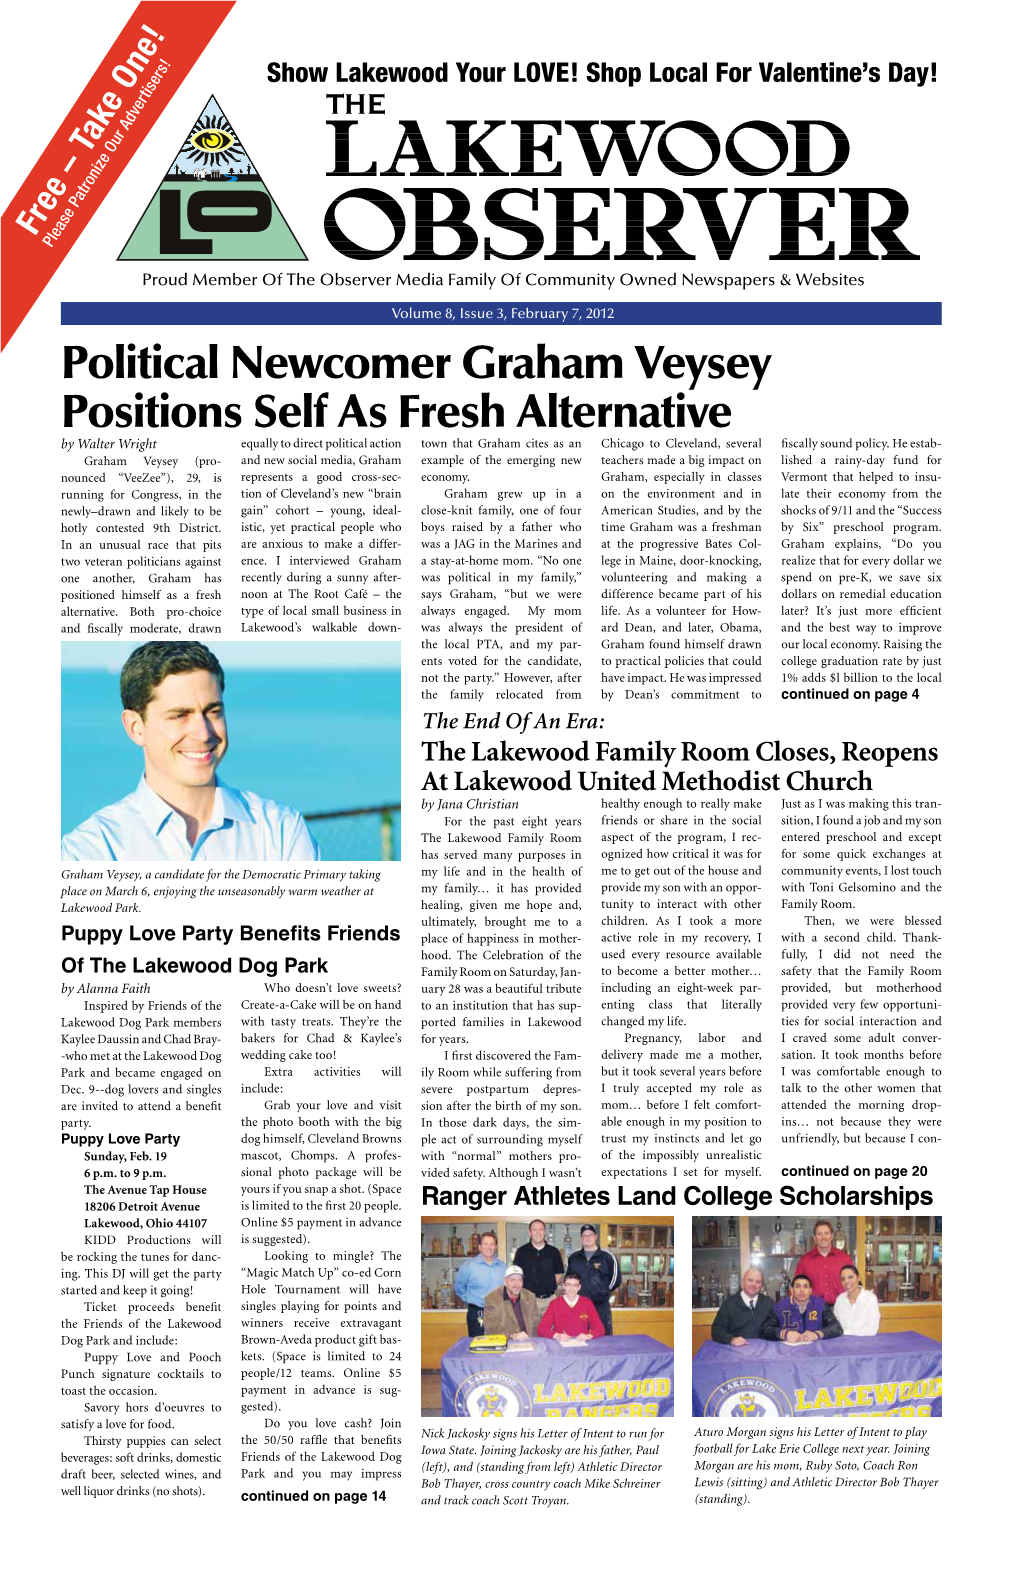 Political Newcomer Graham Veysey Positions Self As Fresh Alternative